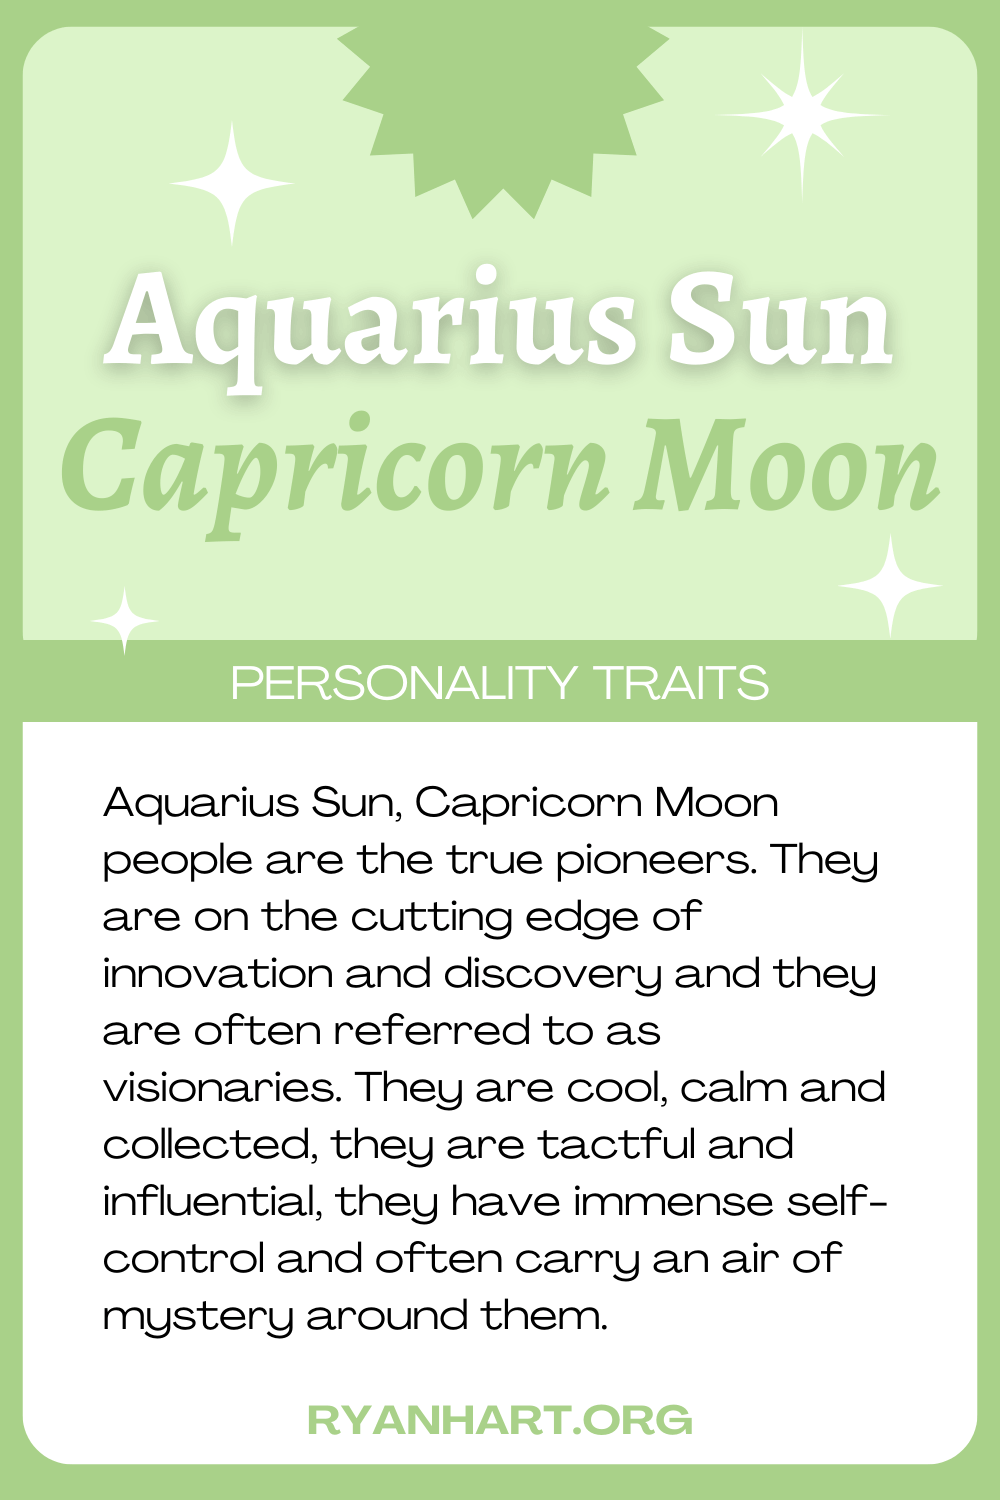 Aquarius Sun Capricorn Moon Description